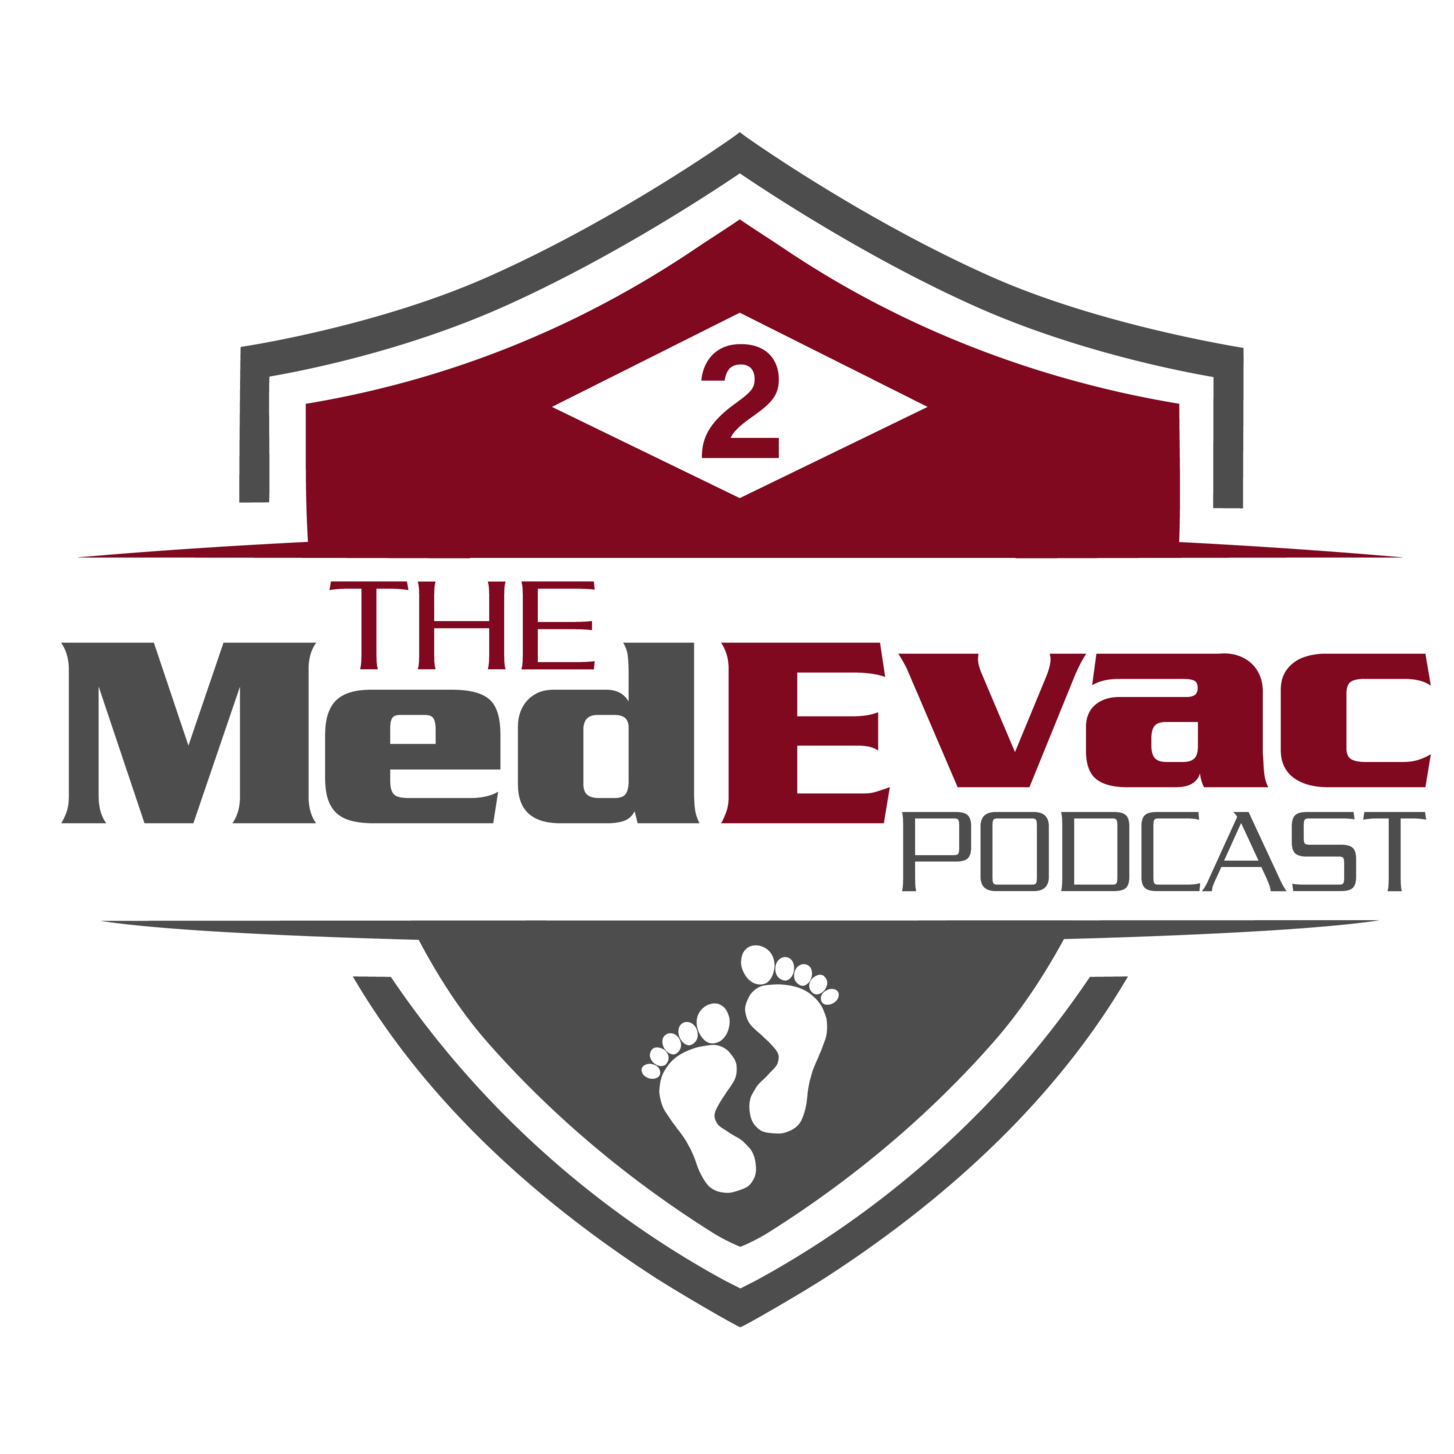 The MEDEVAC Podcast